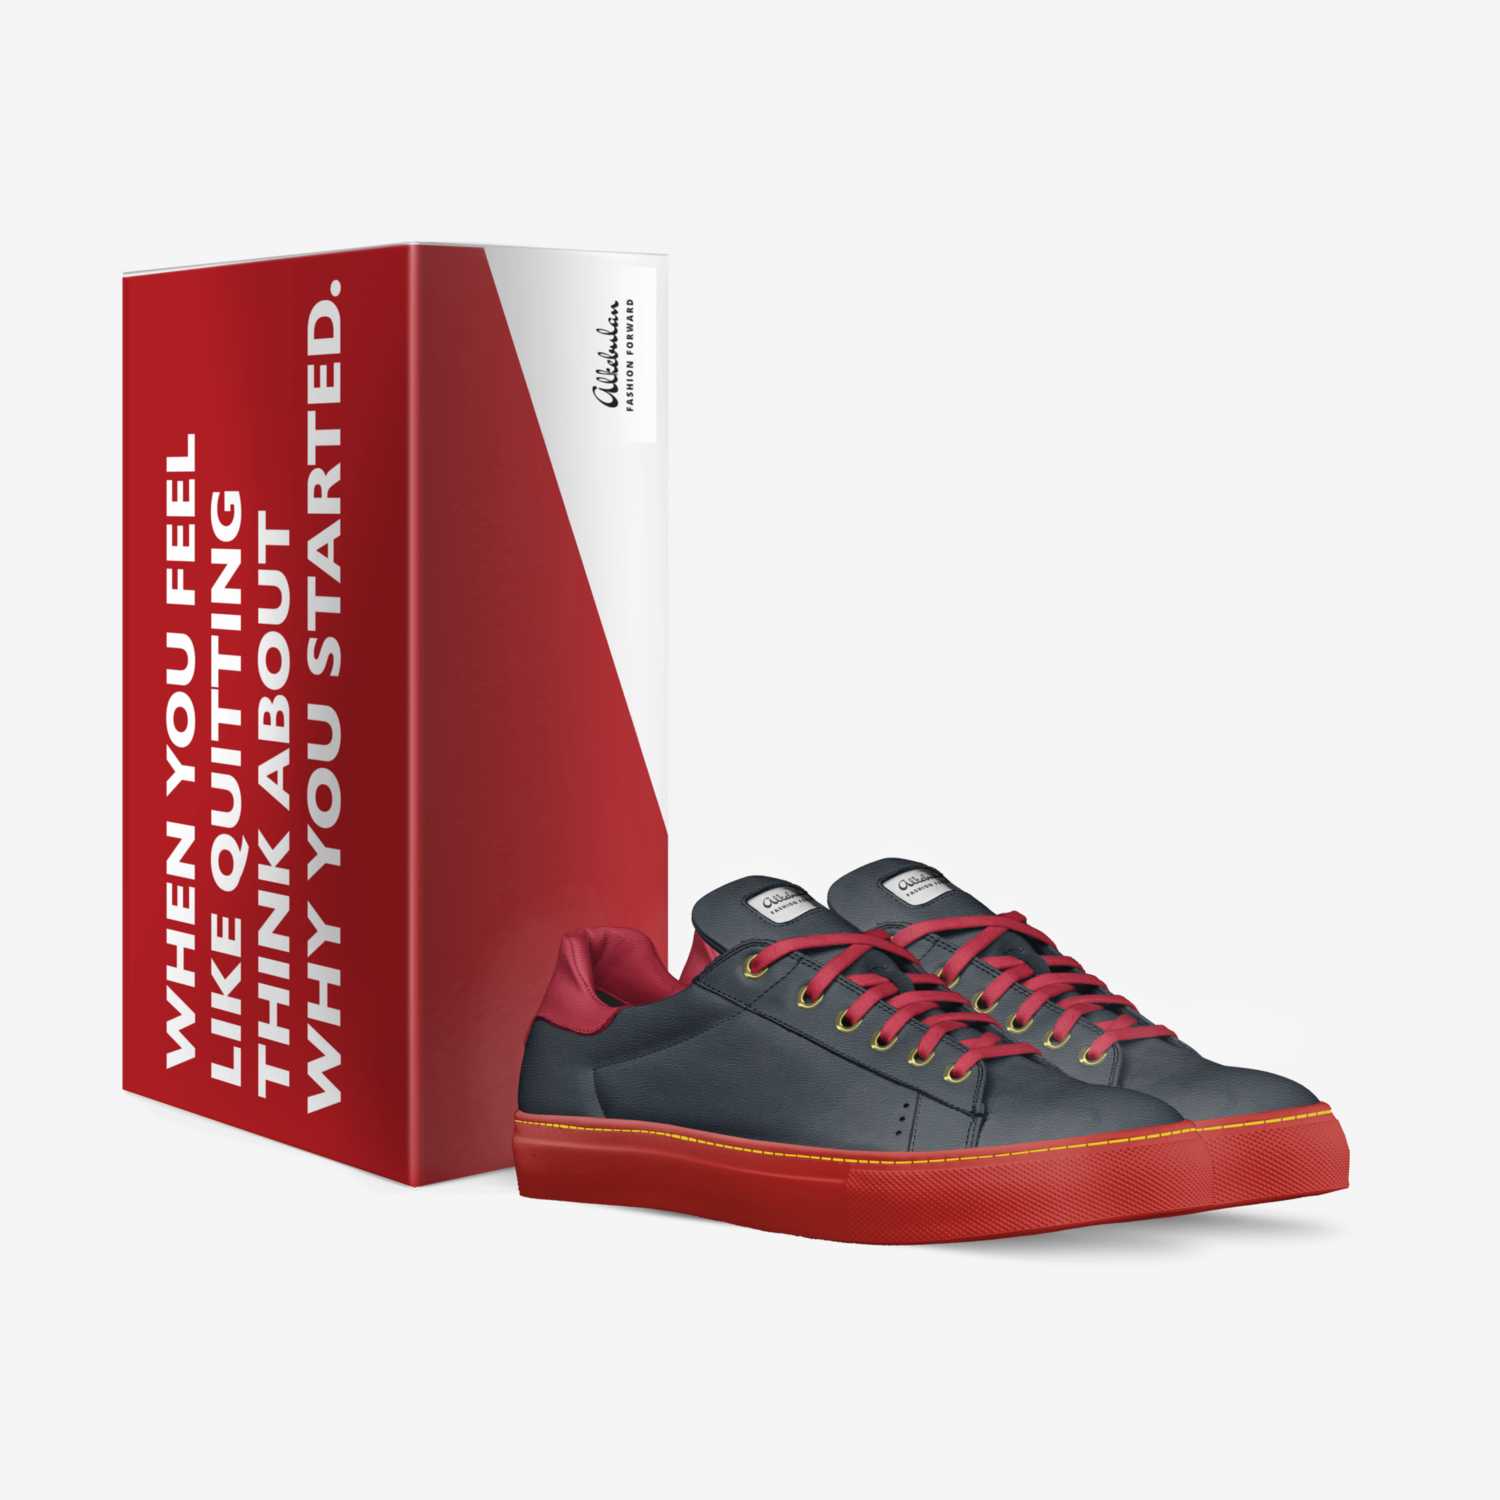 Alkebulan 6 custom made in Italy shoes by Flávio Tavares | Box view